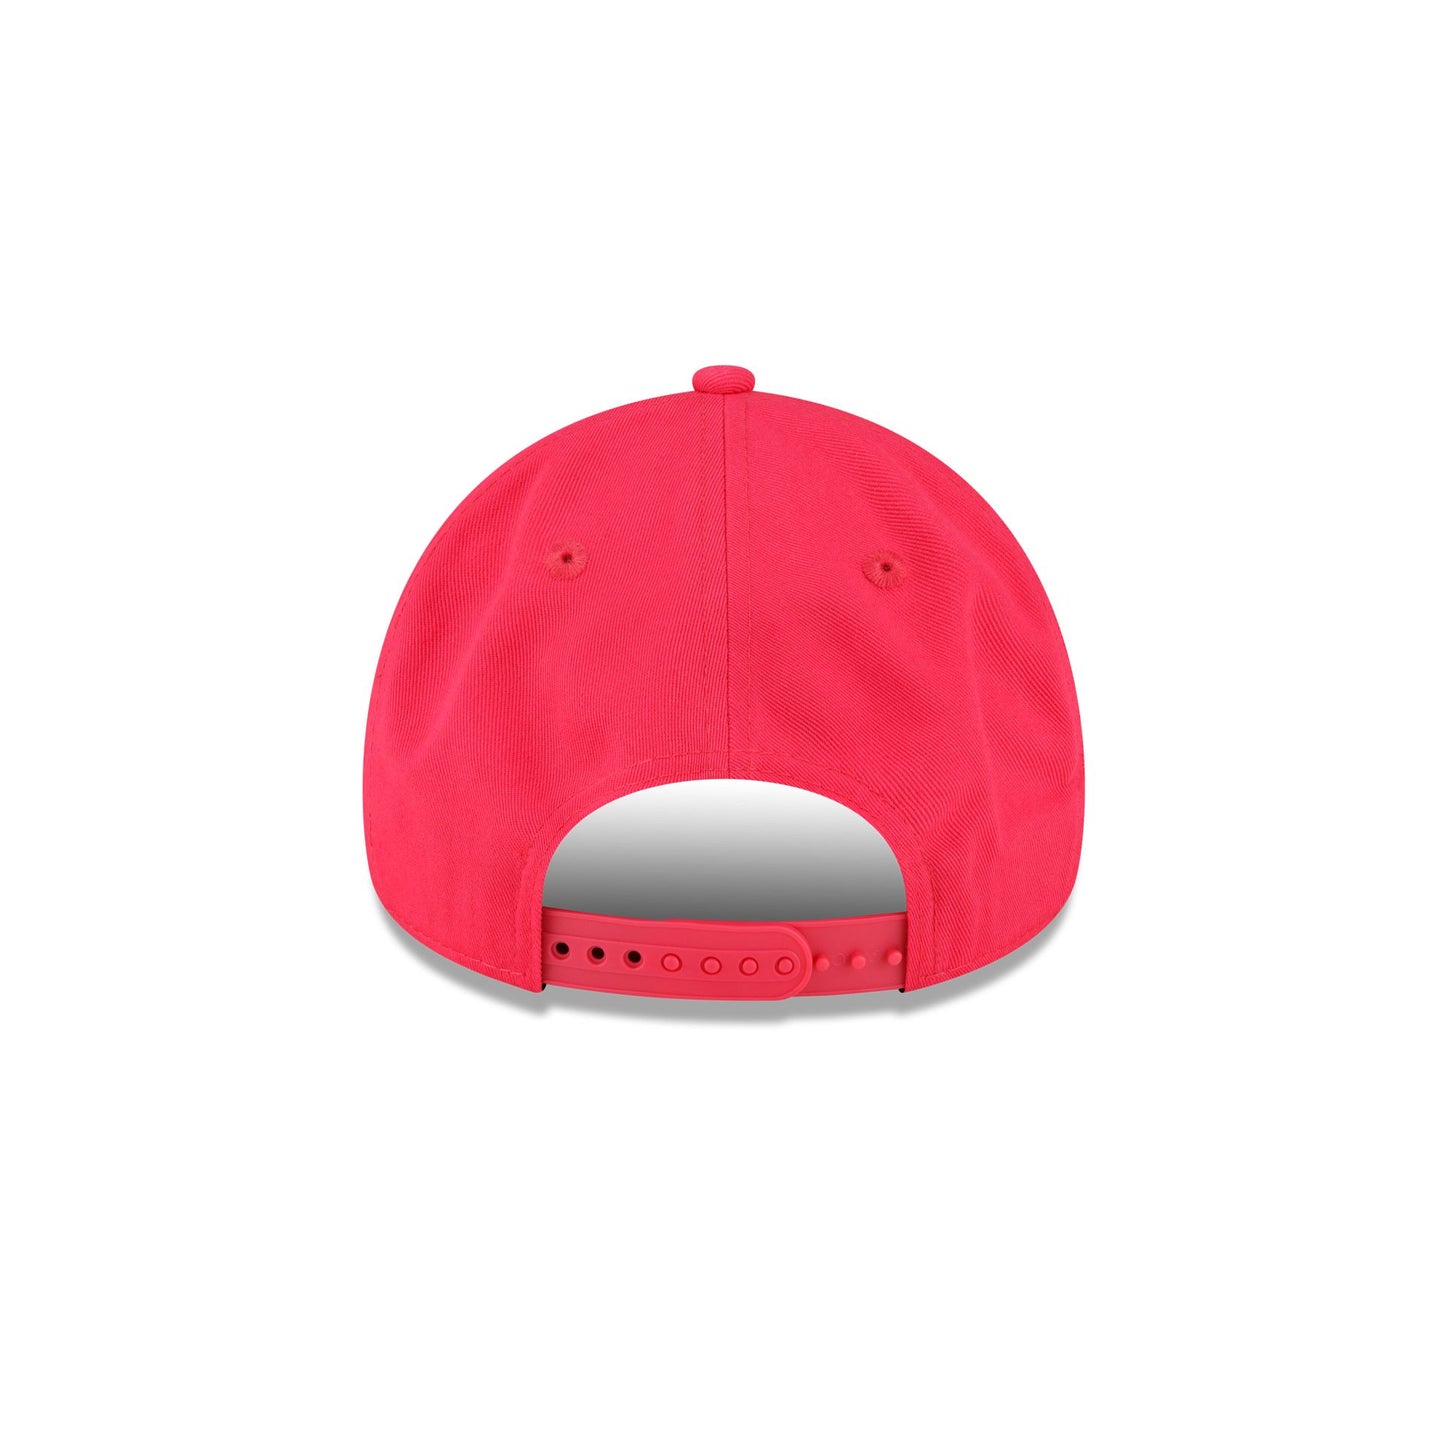 St Louis City SC New Era low profile adjustable white ballcap — Hats N Stuff